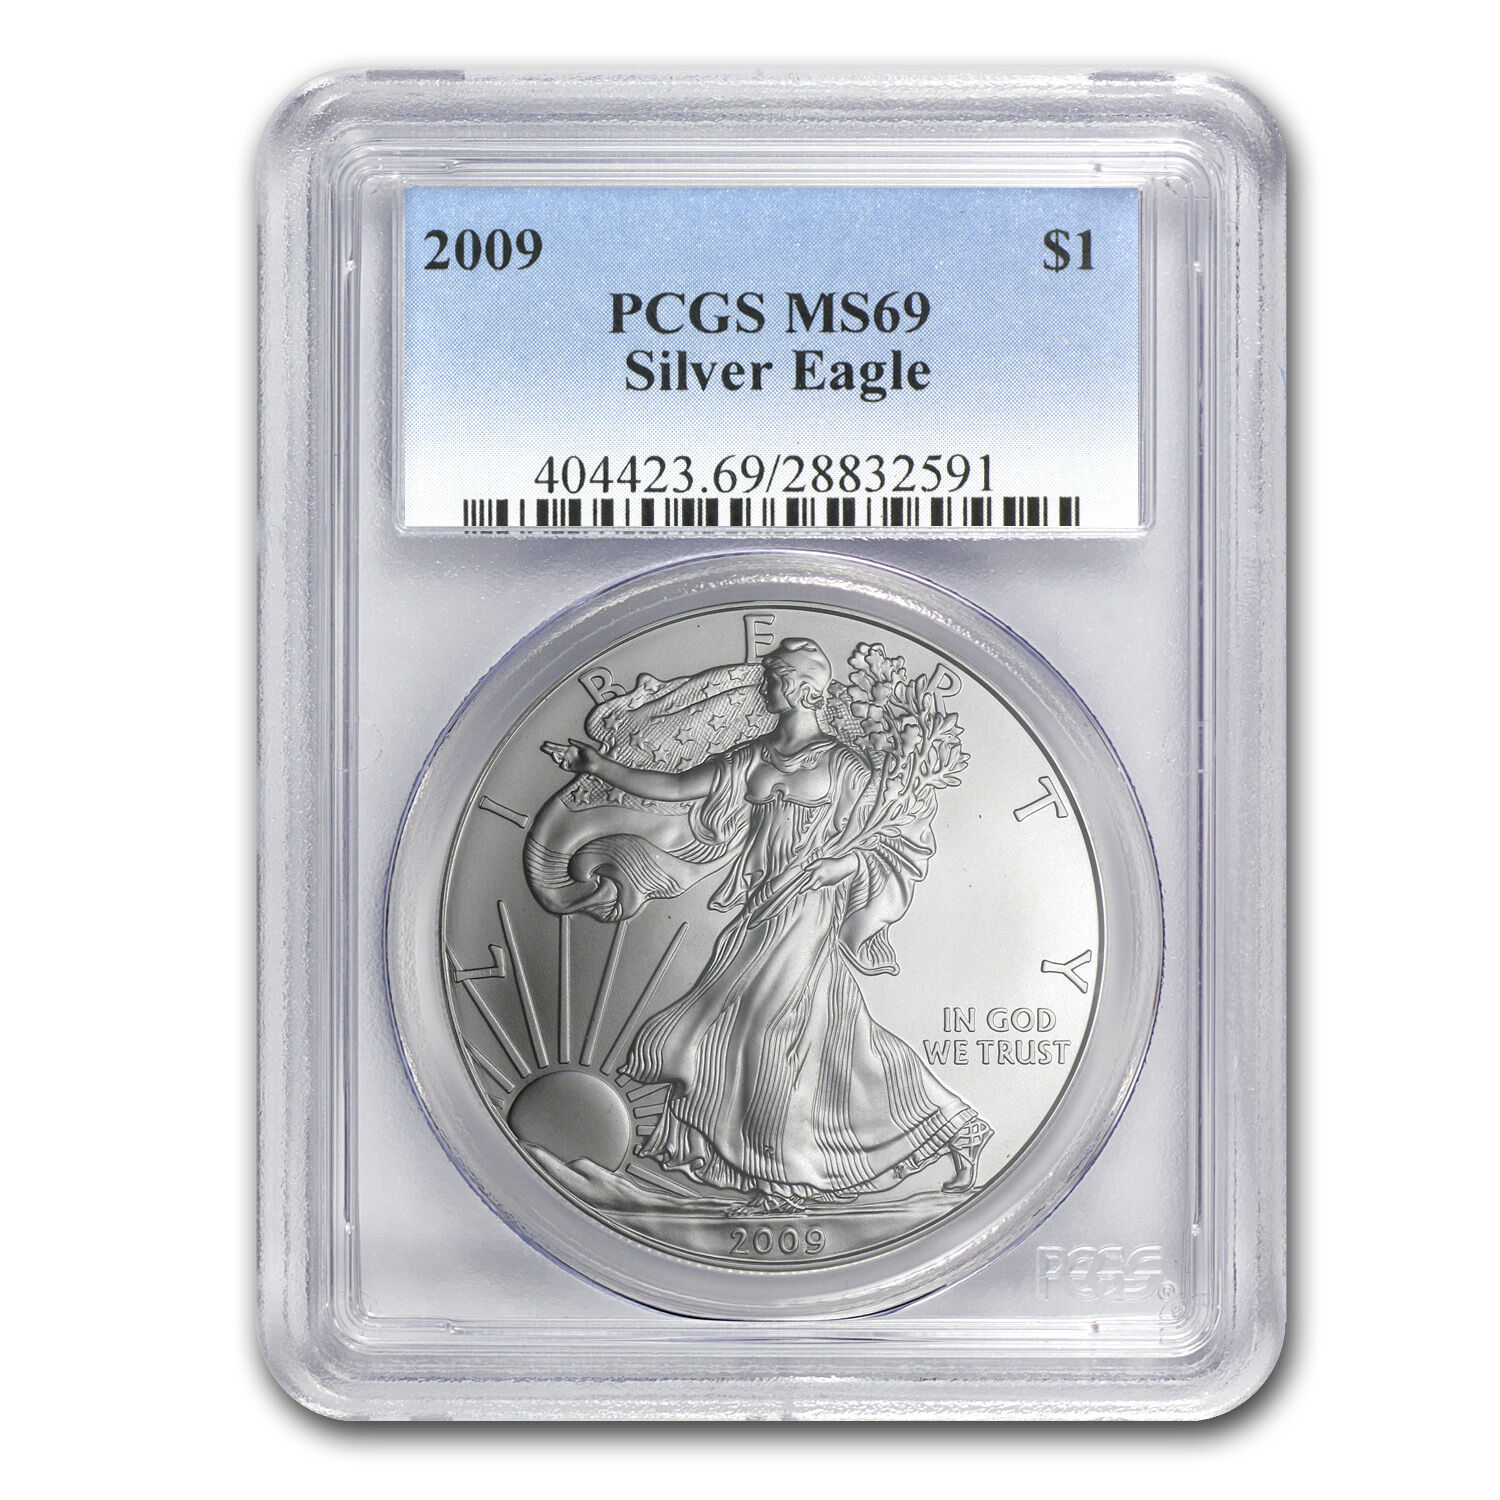 2009 1 oz Silver American Eagle Coin - MS-69 PCGS - SKU #61313